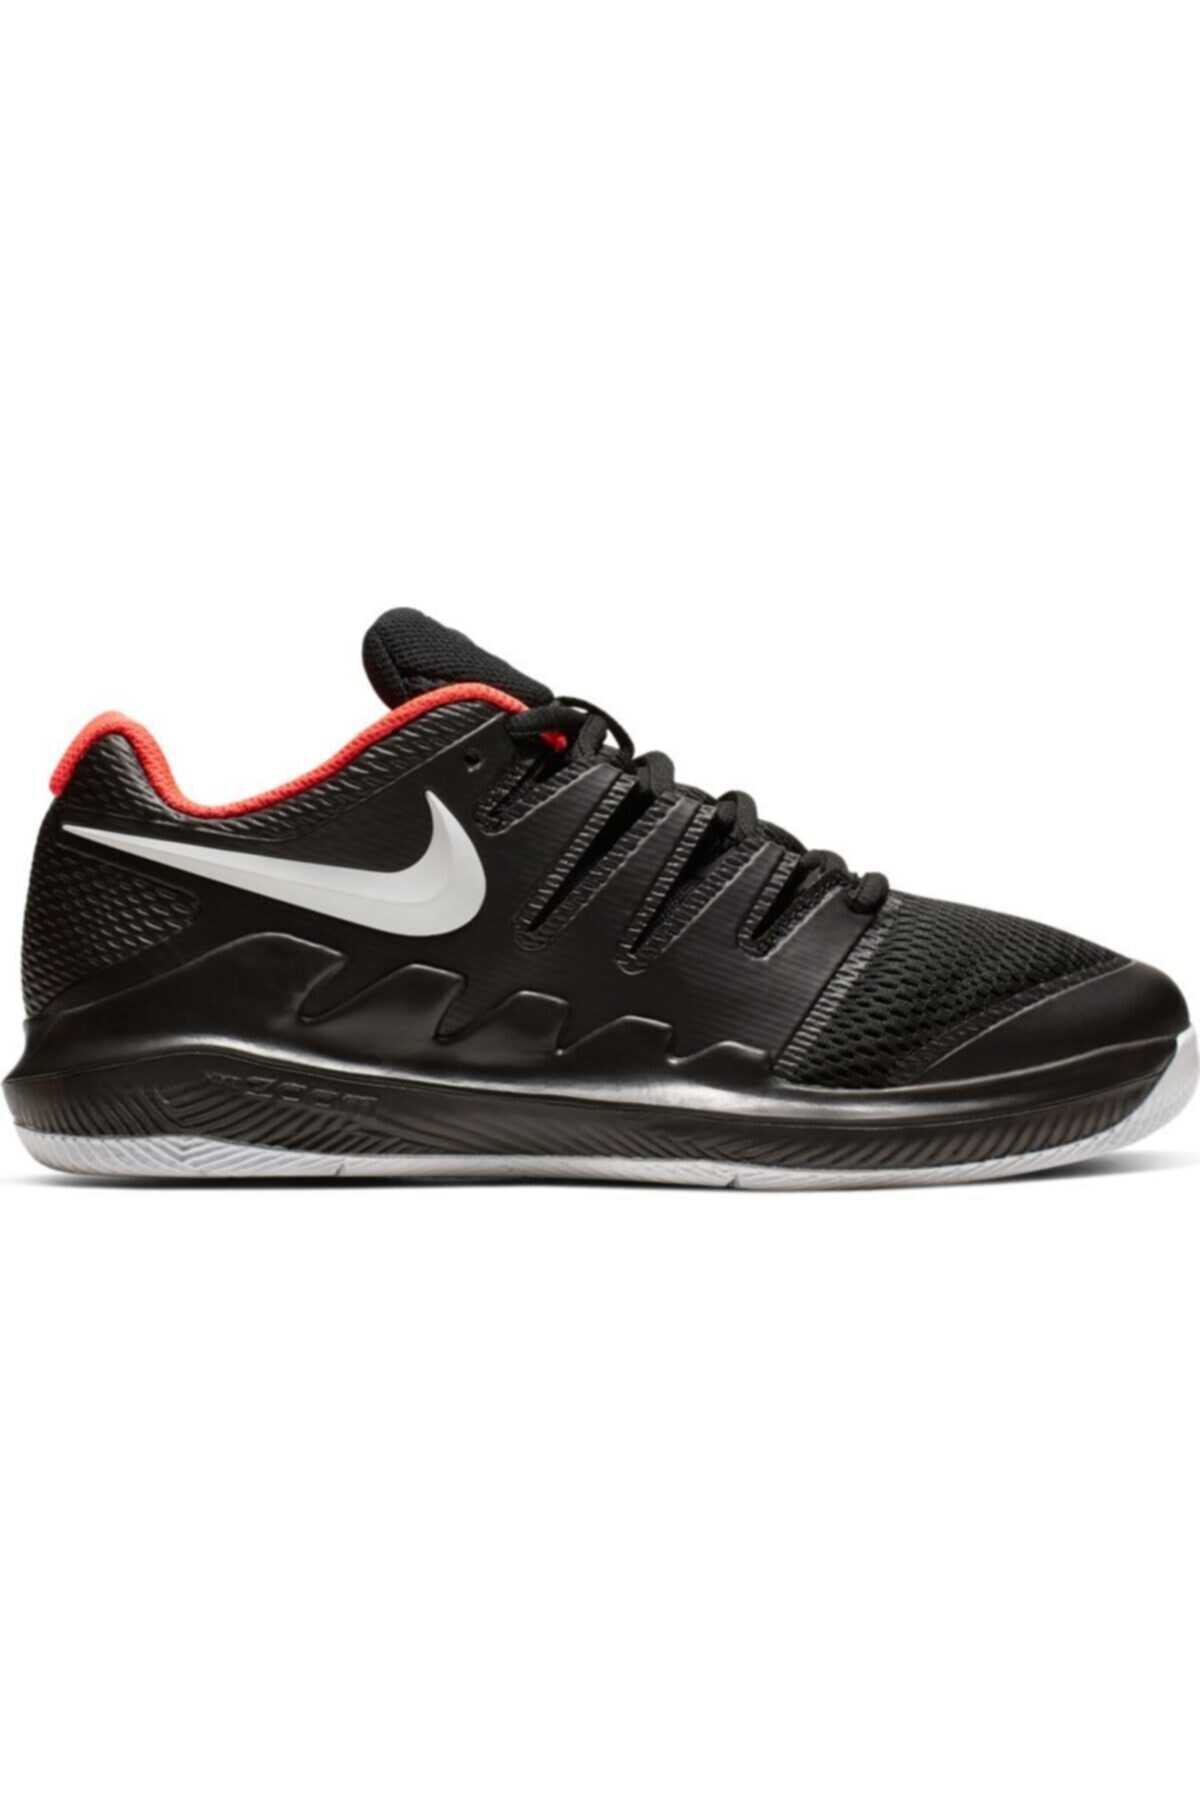 کفش تنیس یونیسکس مشکی برند Nike 